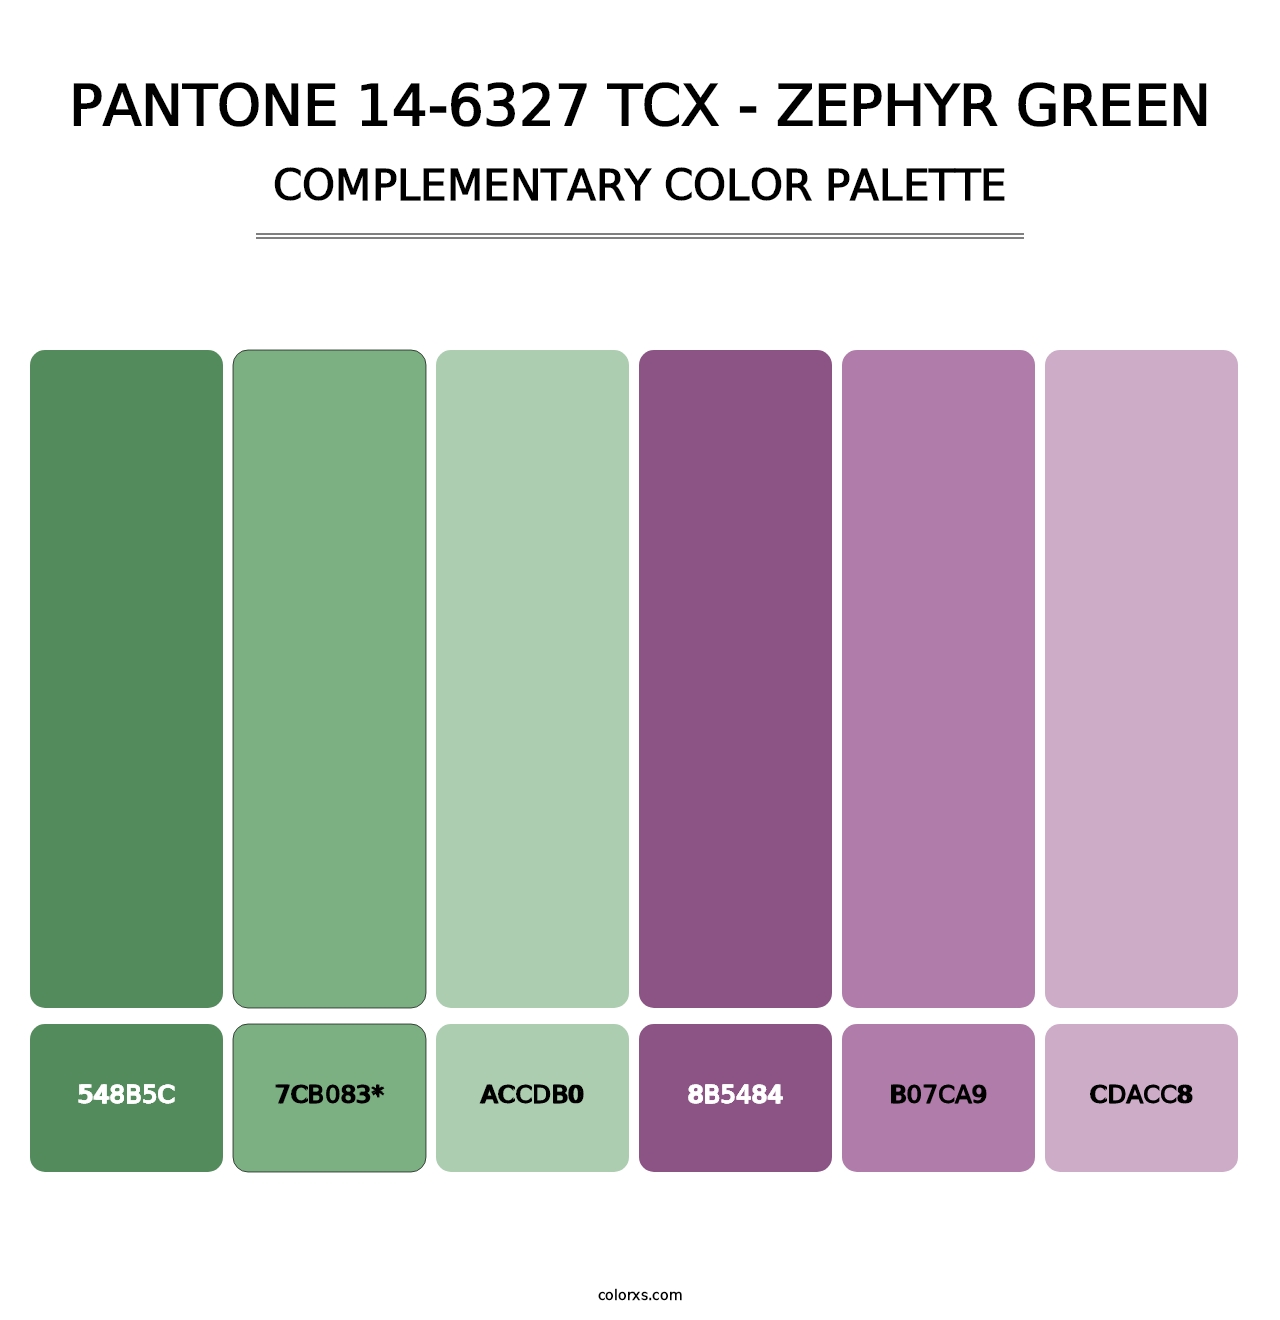 PANTONE 14-6327 TCX - Zephyr Green - Complementary Color Palette